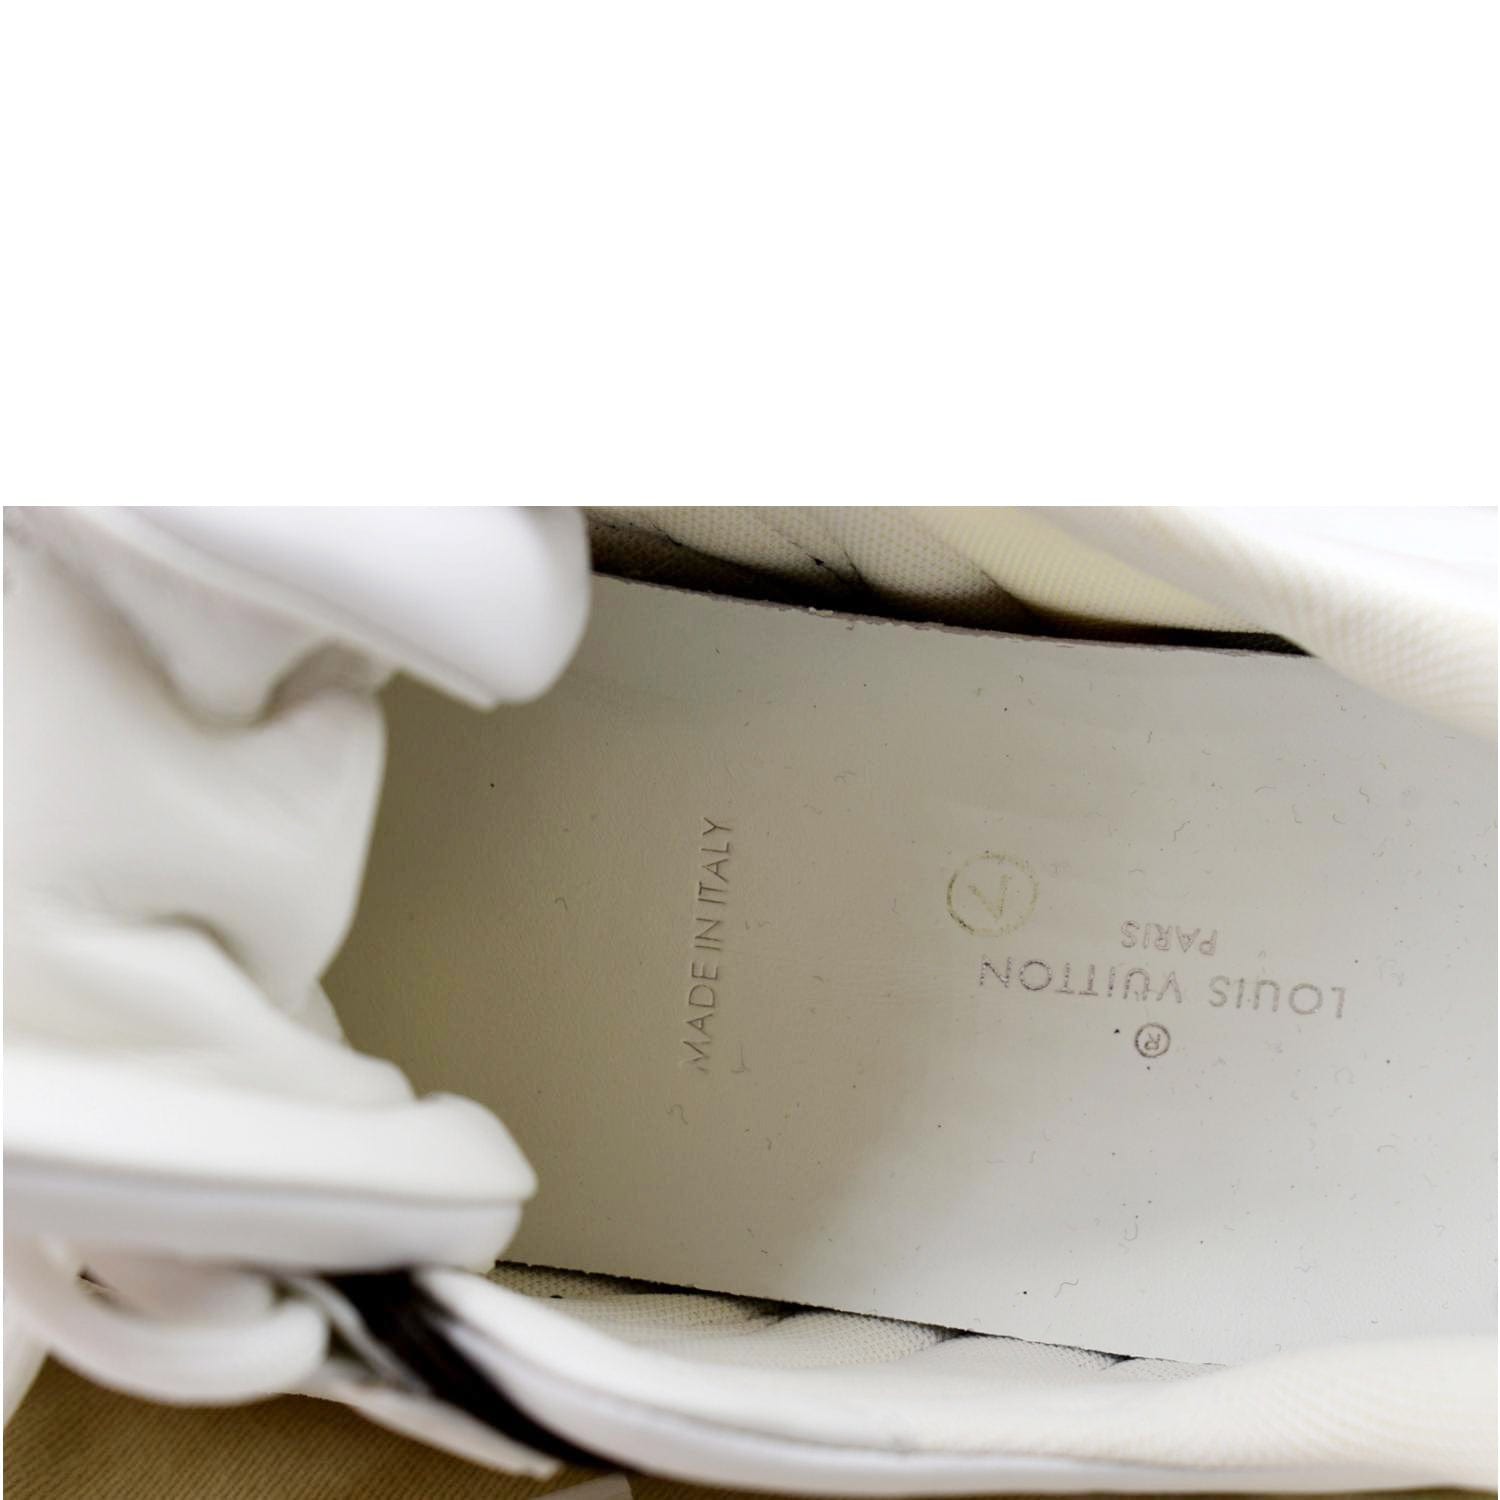 Louis Vuitton Monogram Canvas Technical Fabric Archlight Sneaker